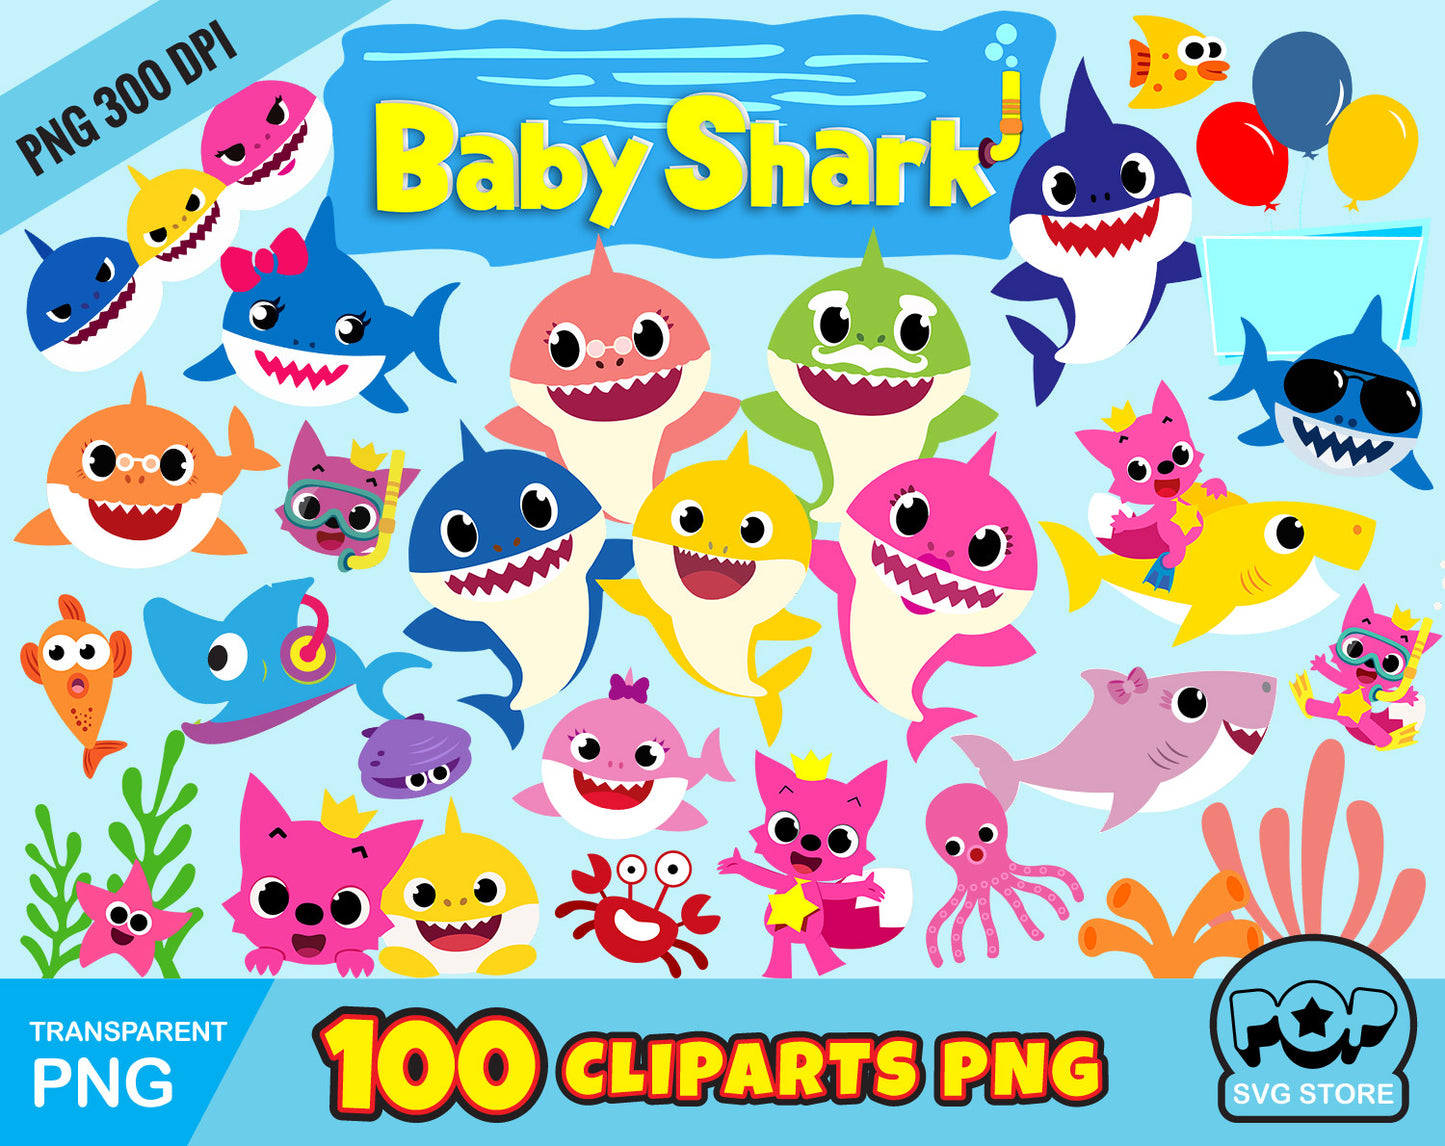 Baby Shark 100 cliparts set, transparent PNG, designs for decoration / sublimation, instant download